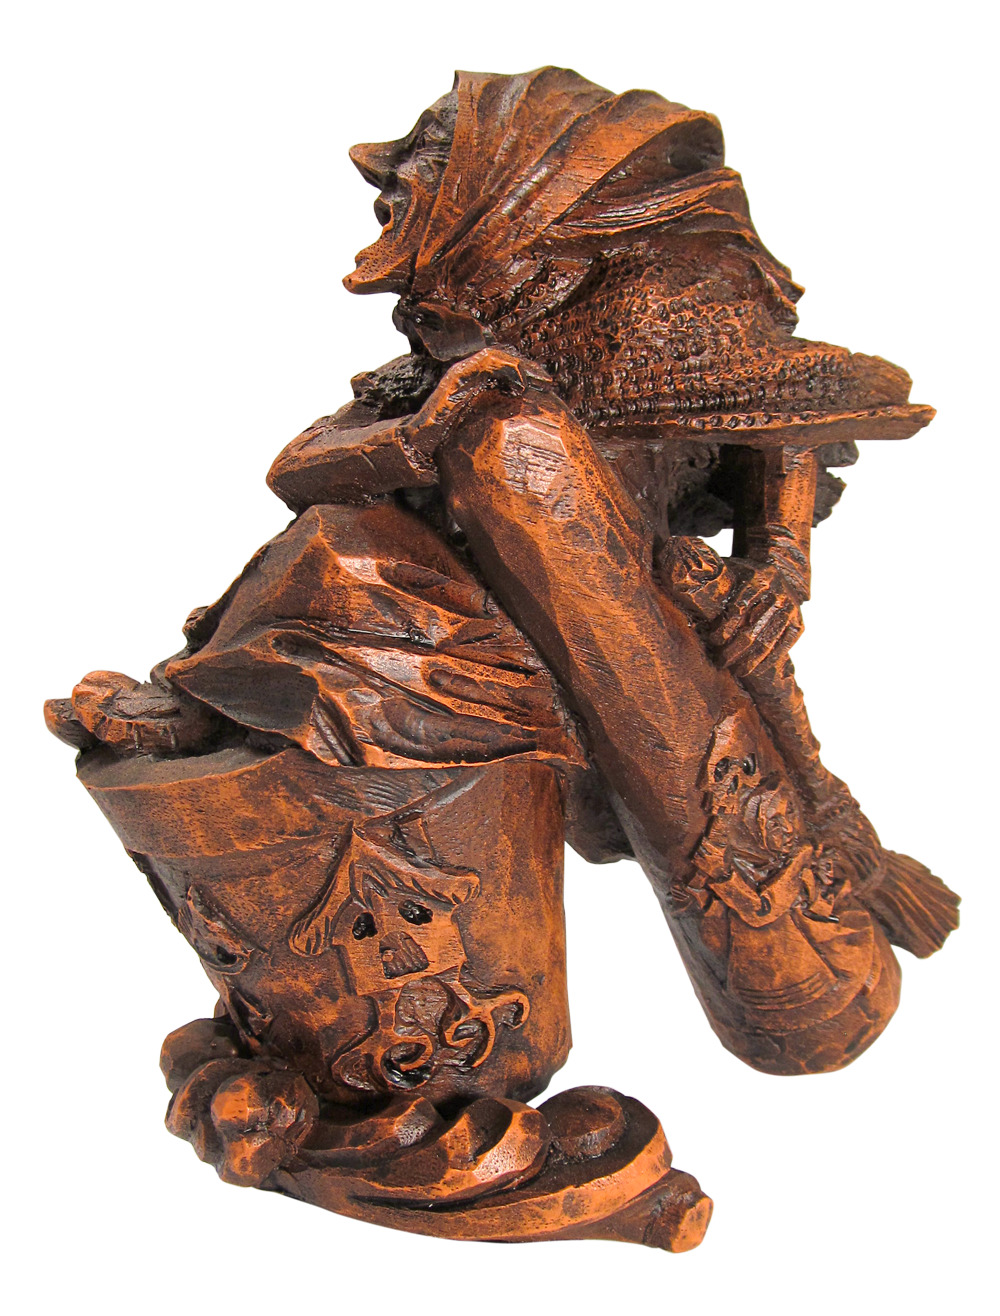 Baba Yaga Statue - Slavic Folklore Crone Goddess - Dryad Design - Wood Finish